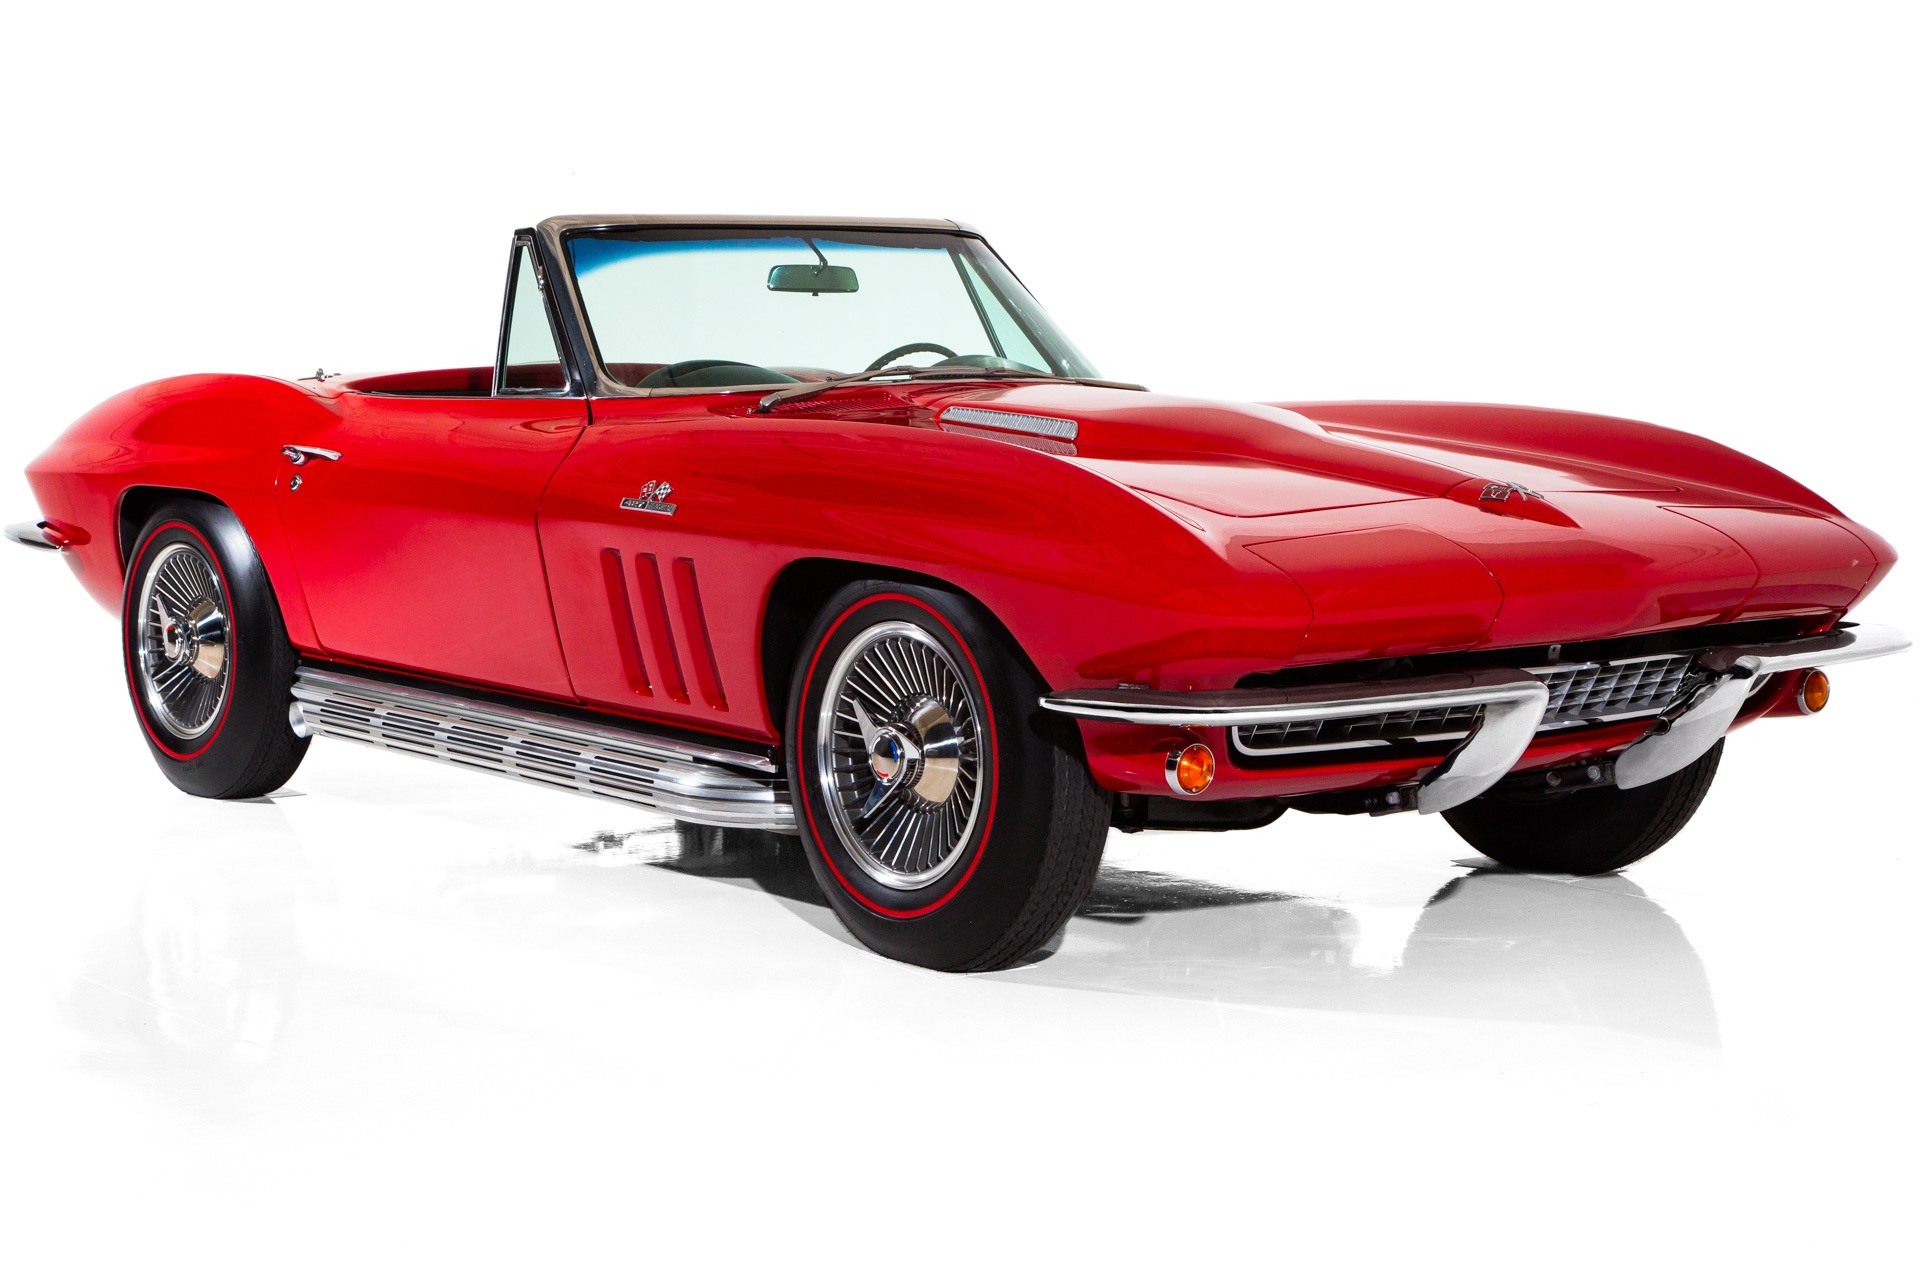 For Sale Used 1966 Chevrolet Corvette Big Block 4-Speed, AC | American Dream Machines Des Moines IA 50309